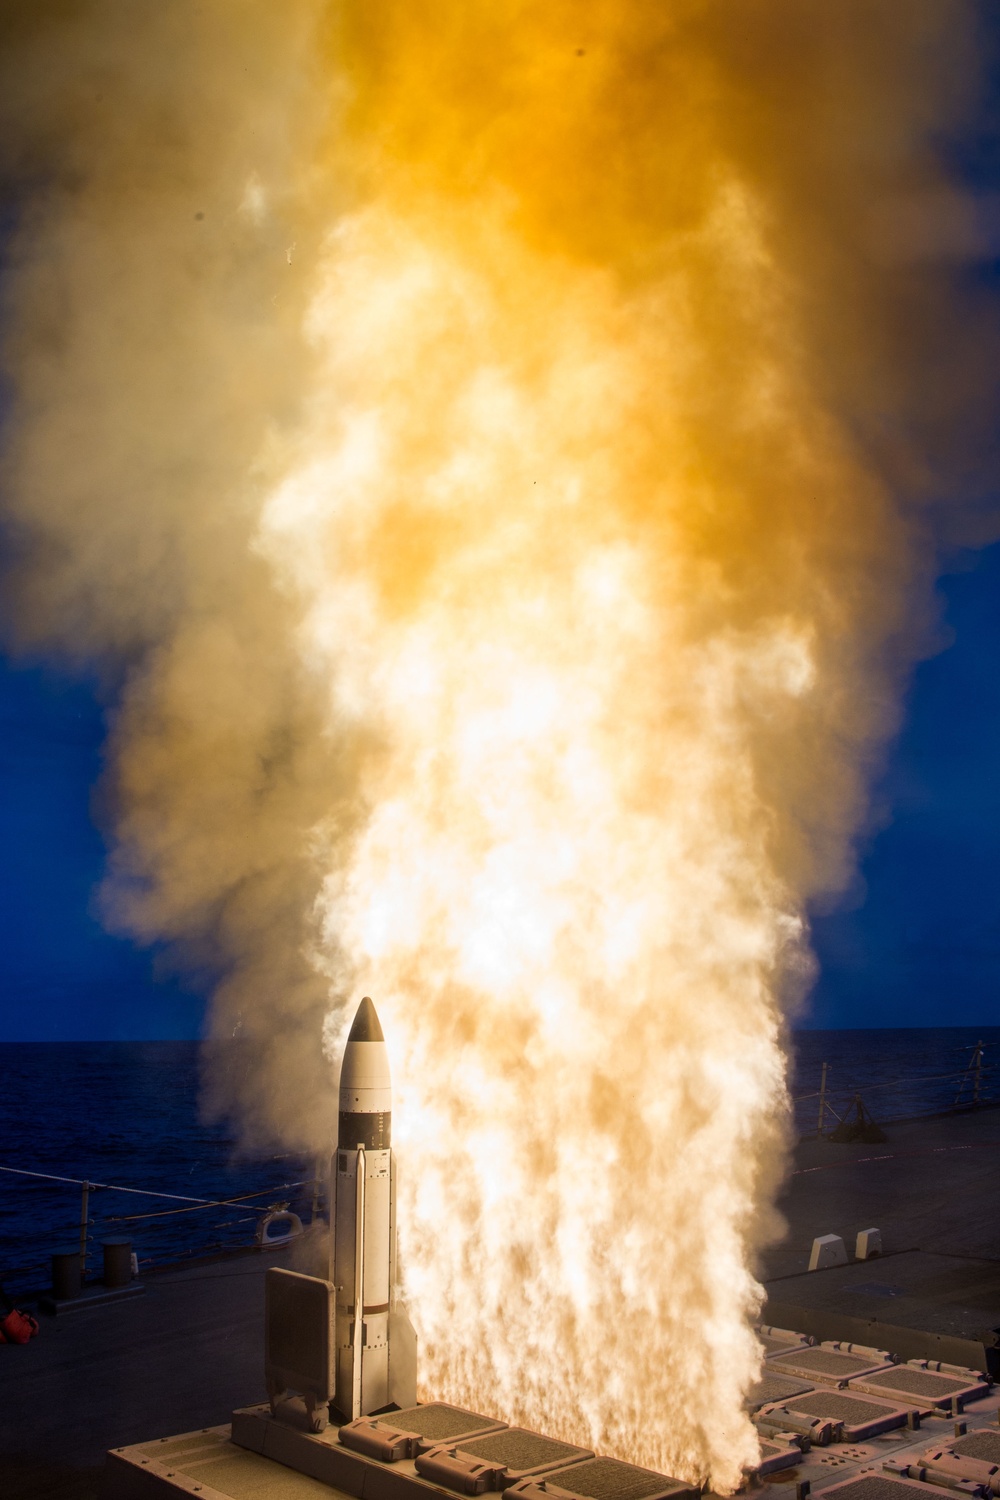 FTM-25 missile defense flight test